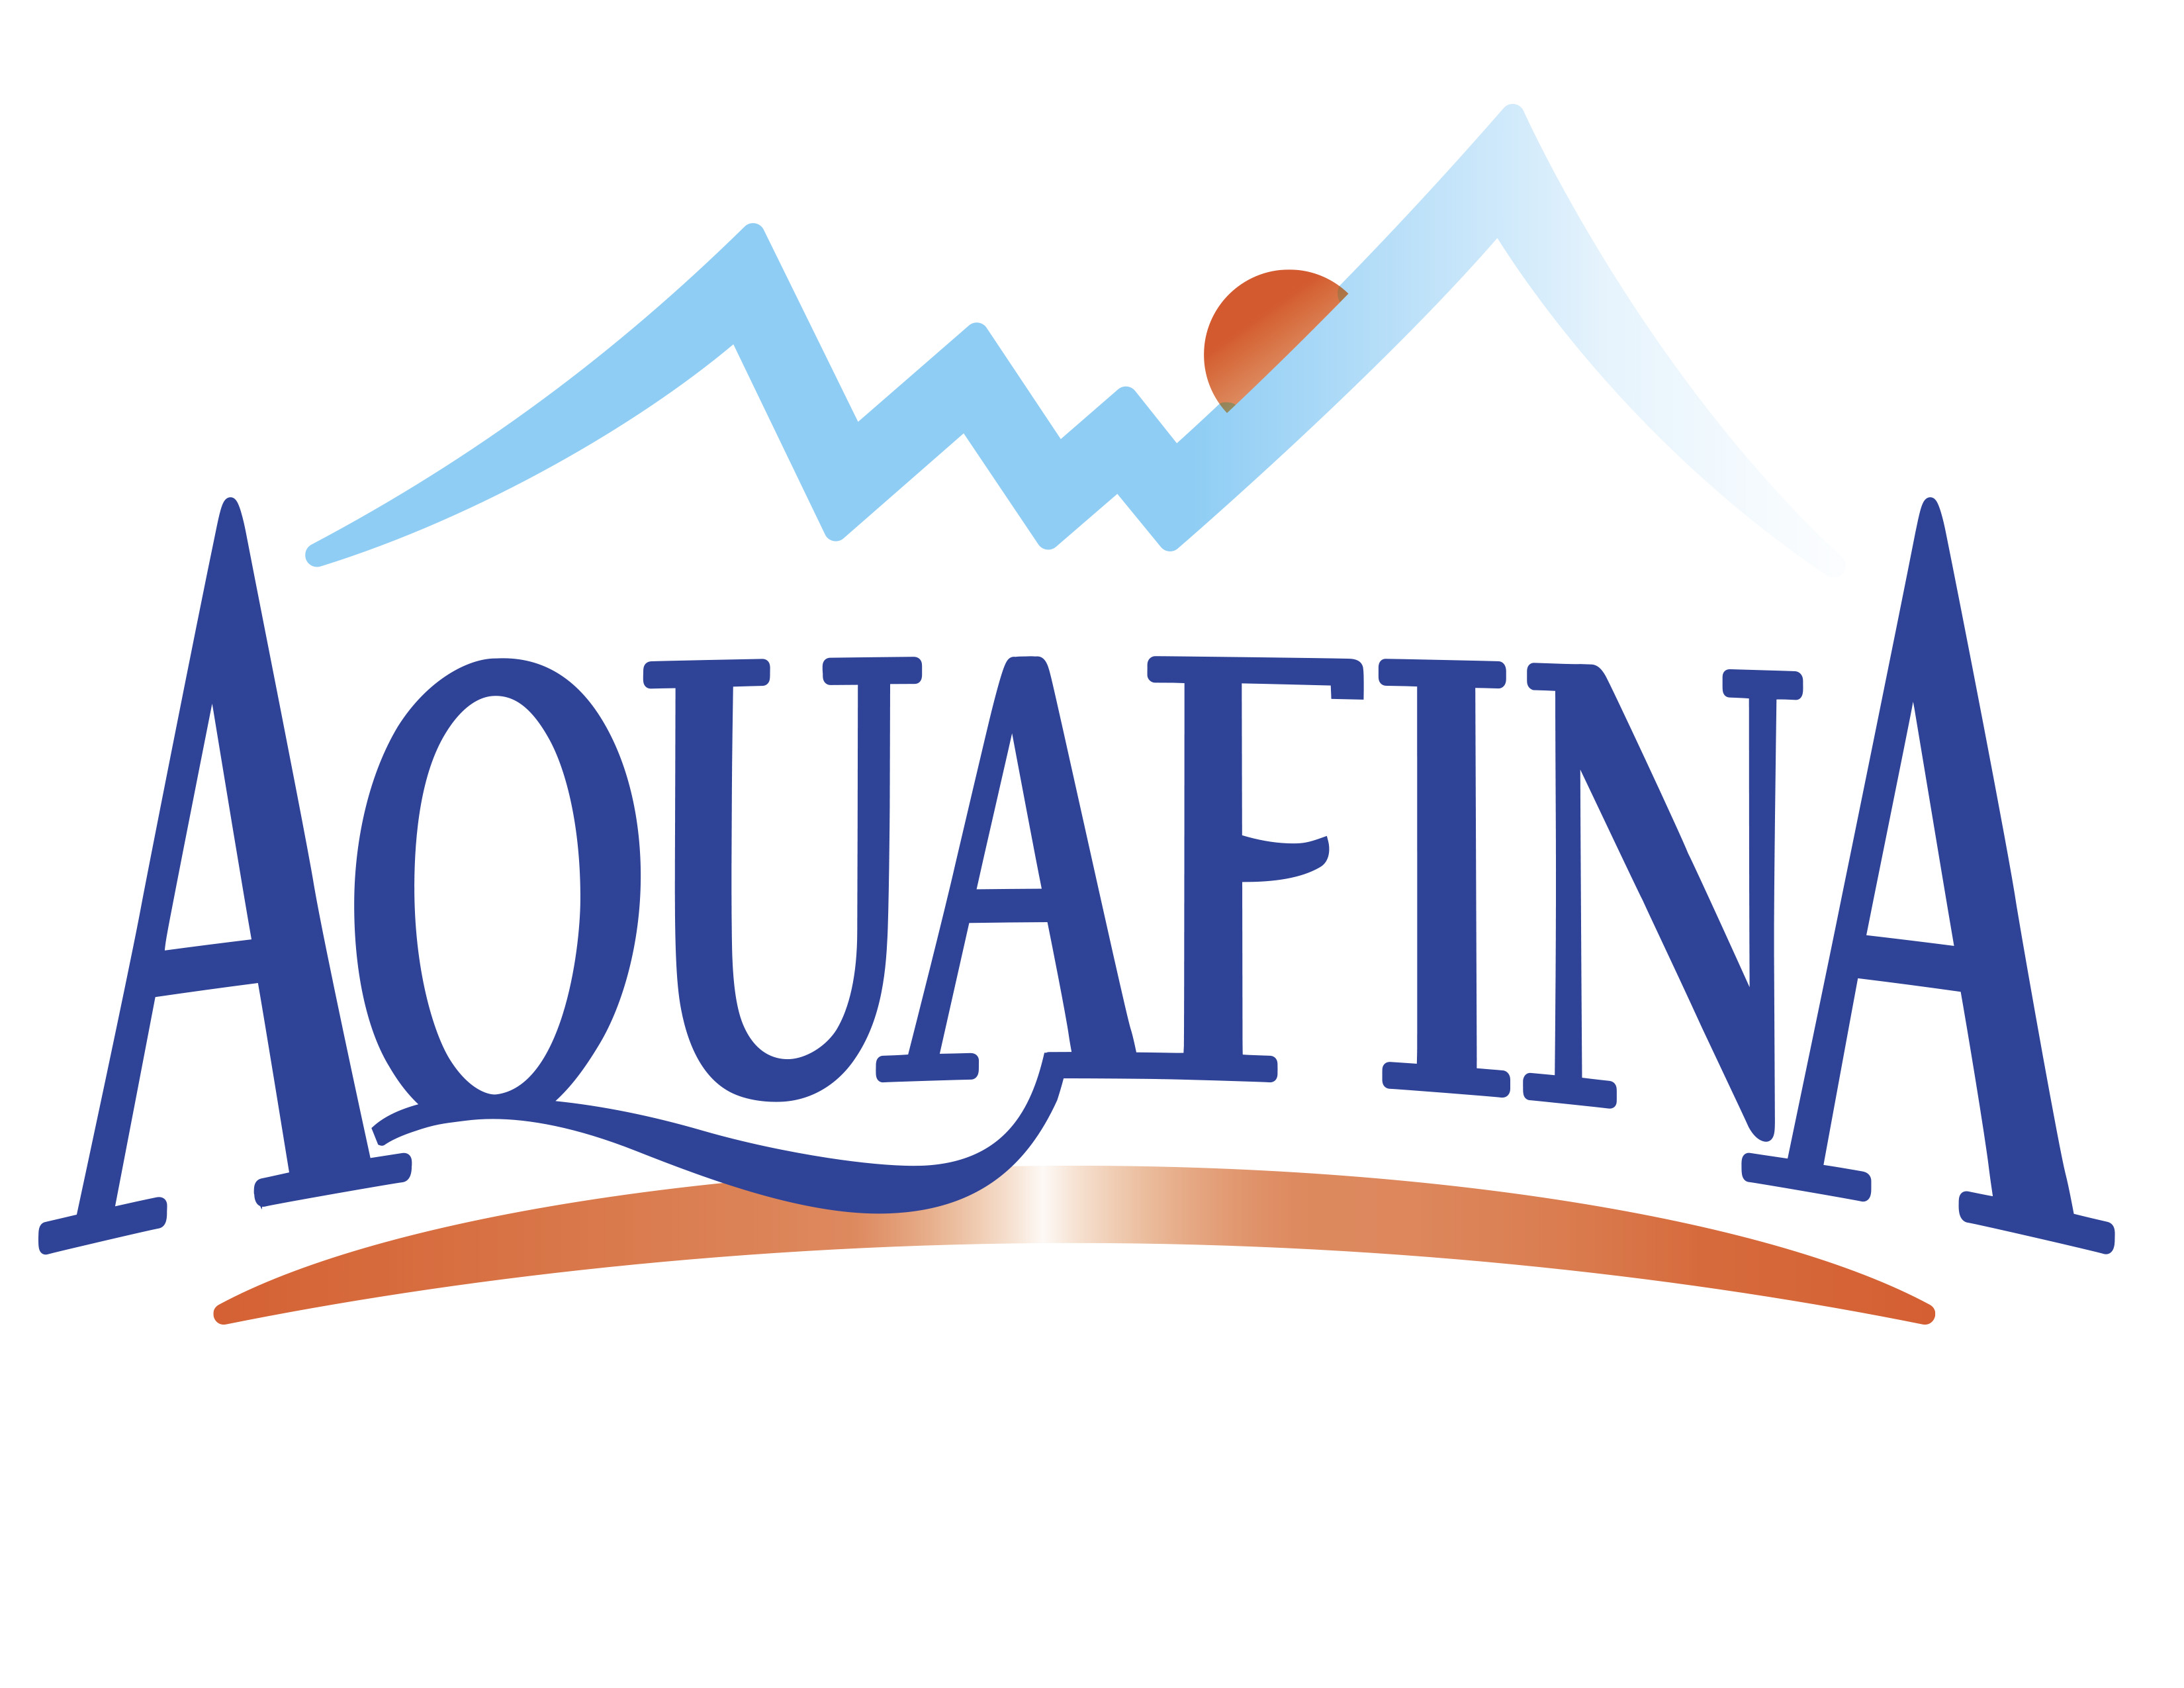 Aquafinas new logo love it or